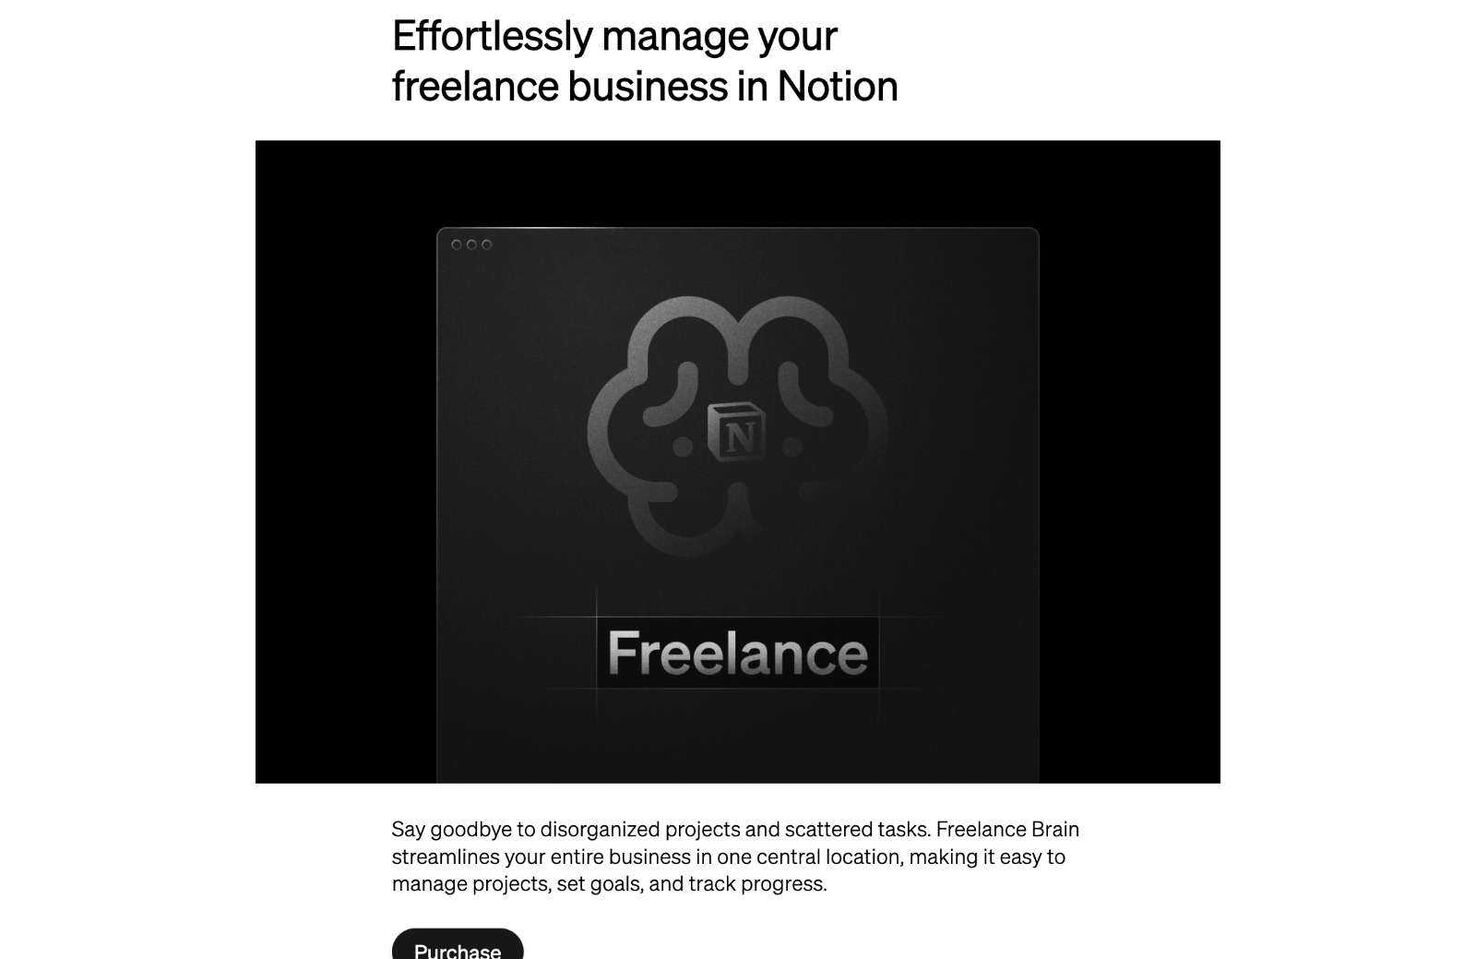 Freelance Brain